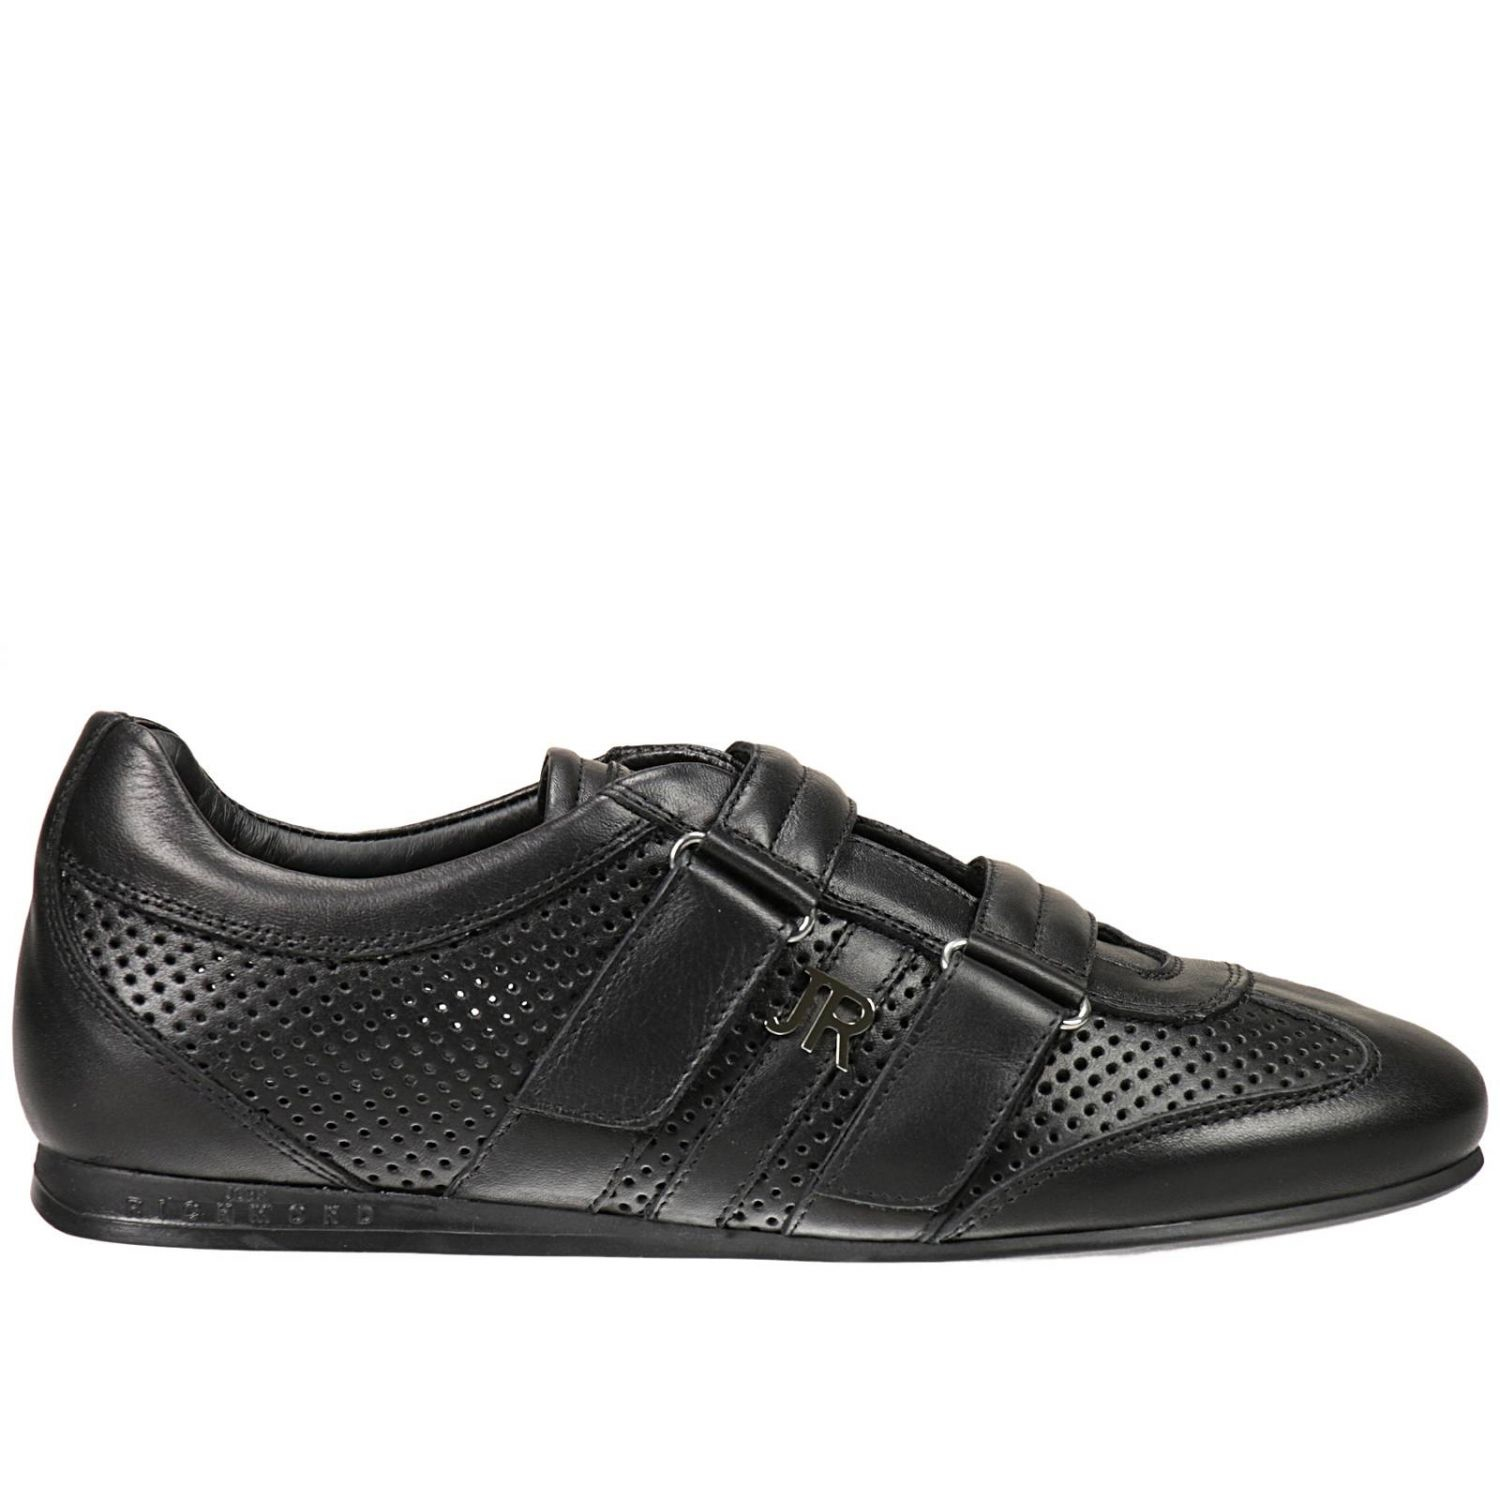 Lyst - John Richmond Sneakers Leather in Black for Men